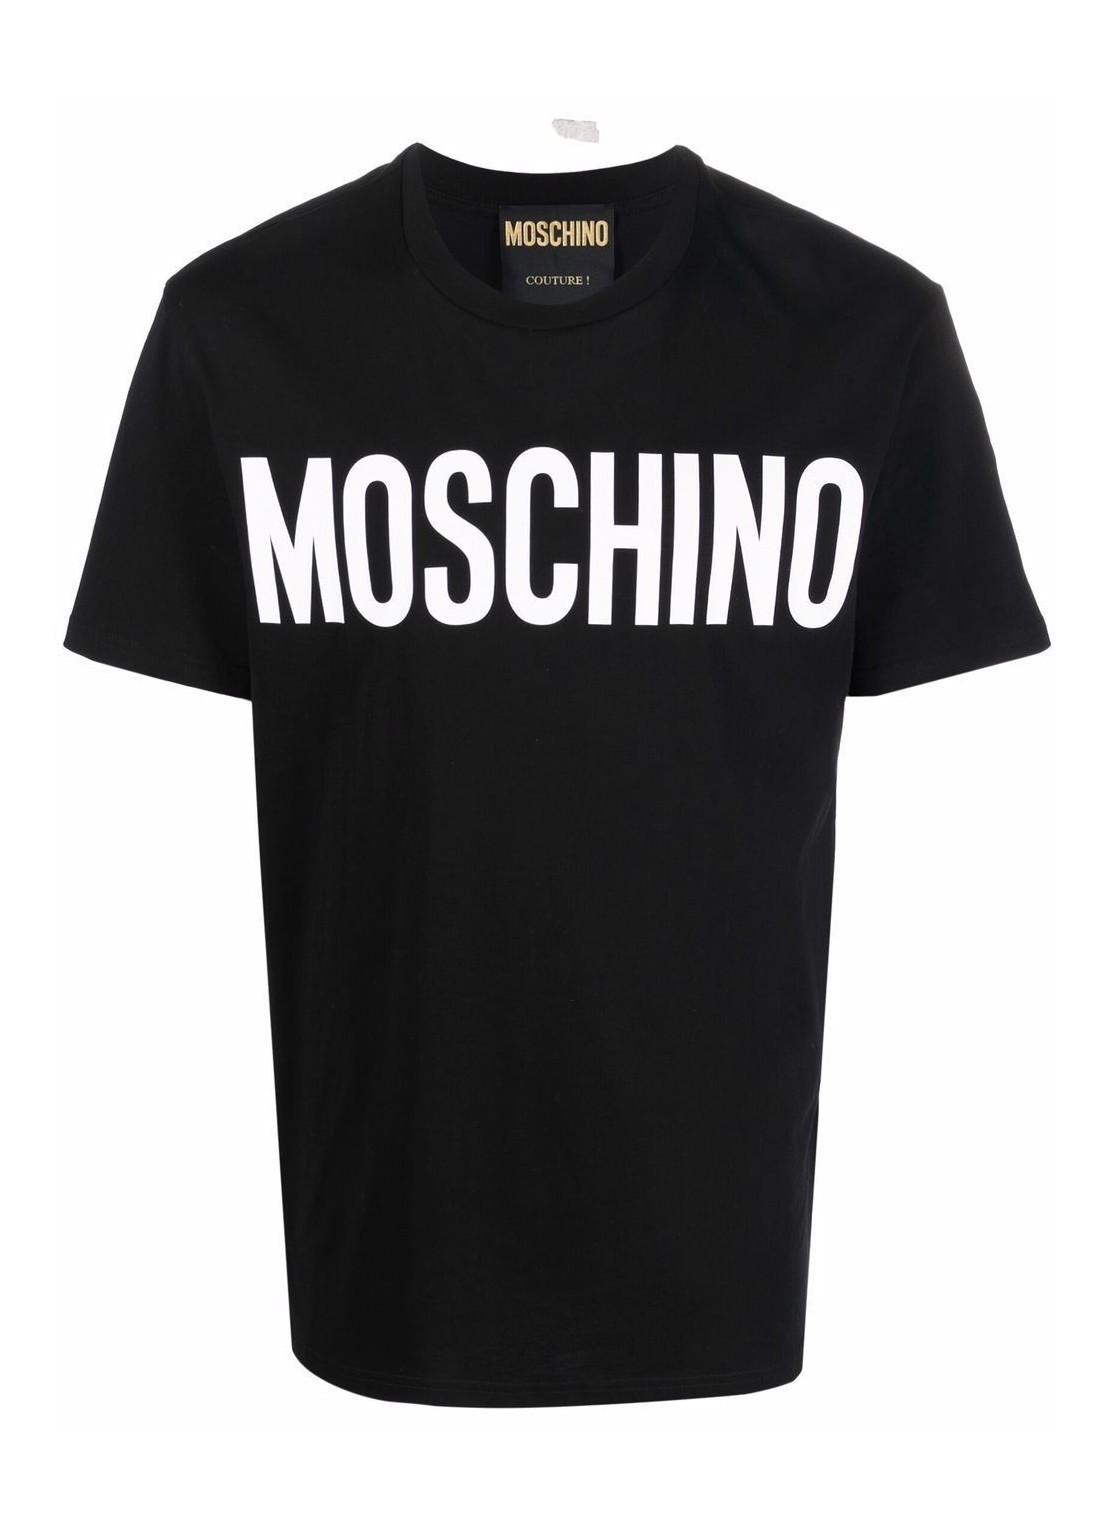 Camiseta moschino couture organic cotton jersey - 07012041 a1555 talla 52
 